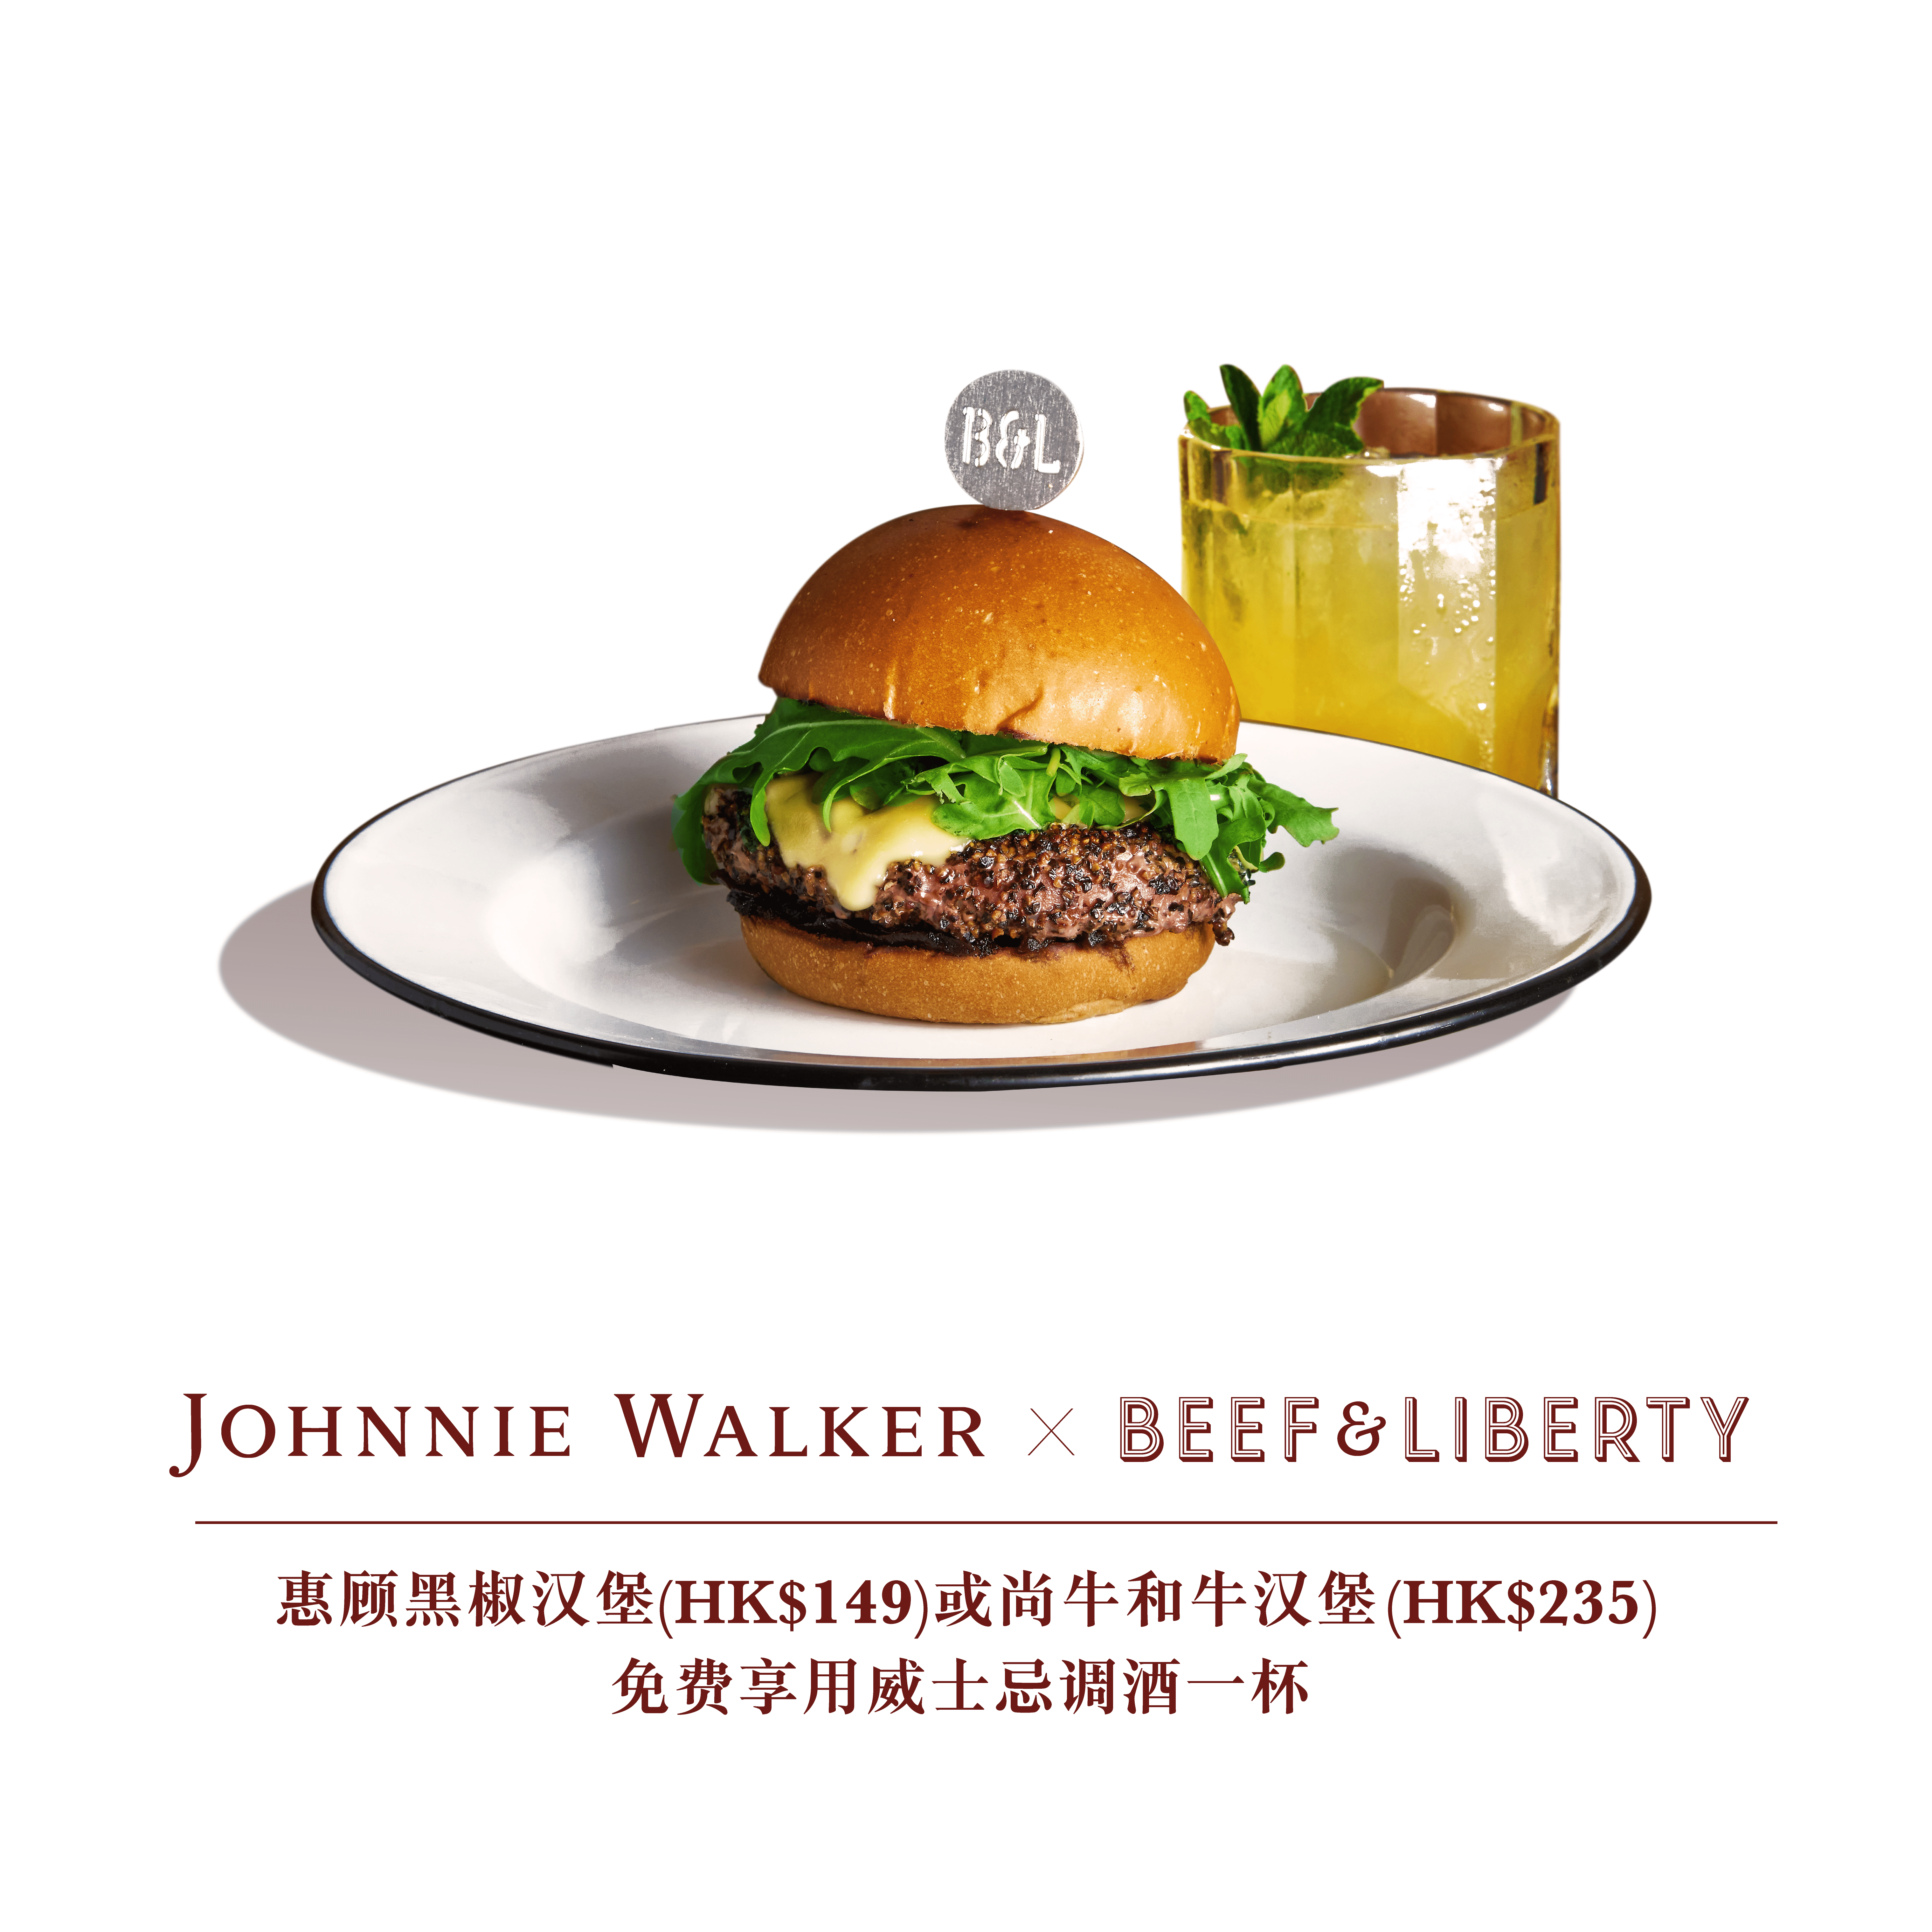 Beef & Liberty X Johnnie Walker